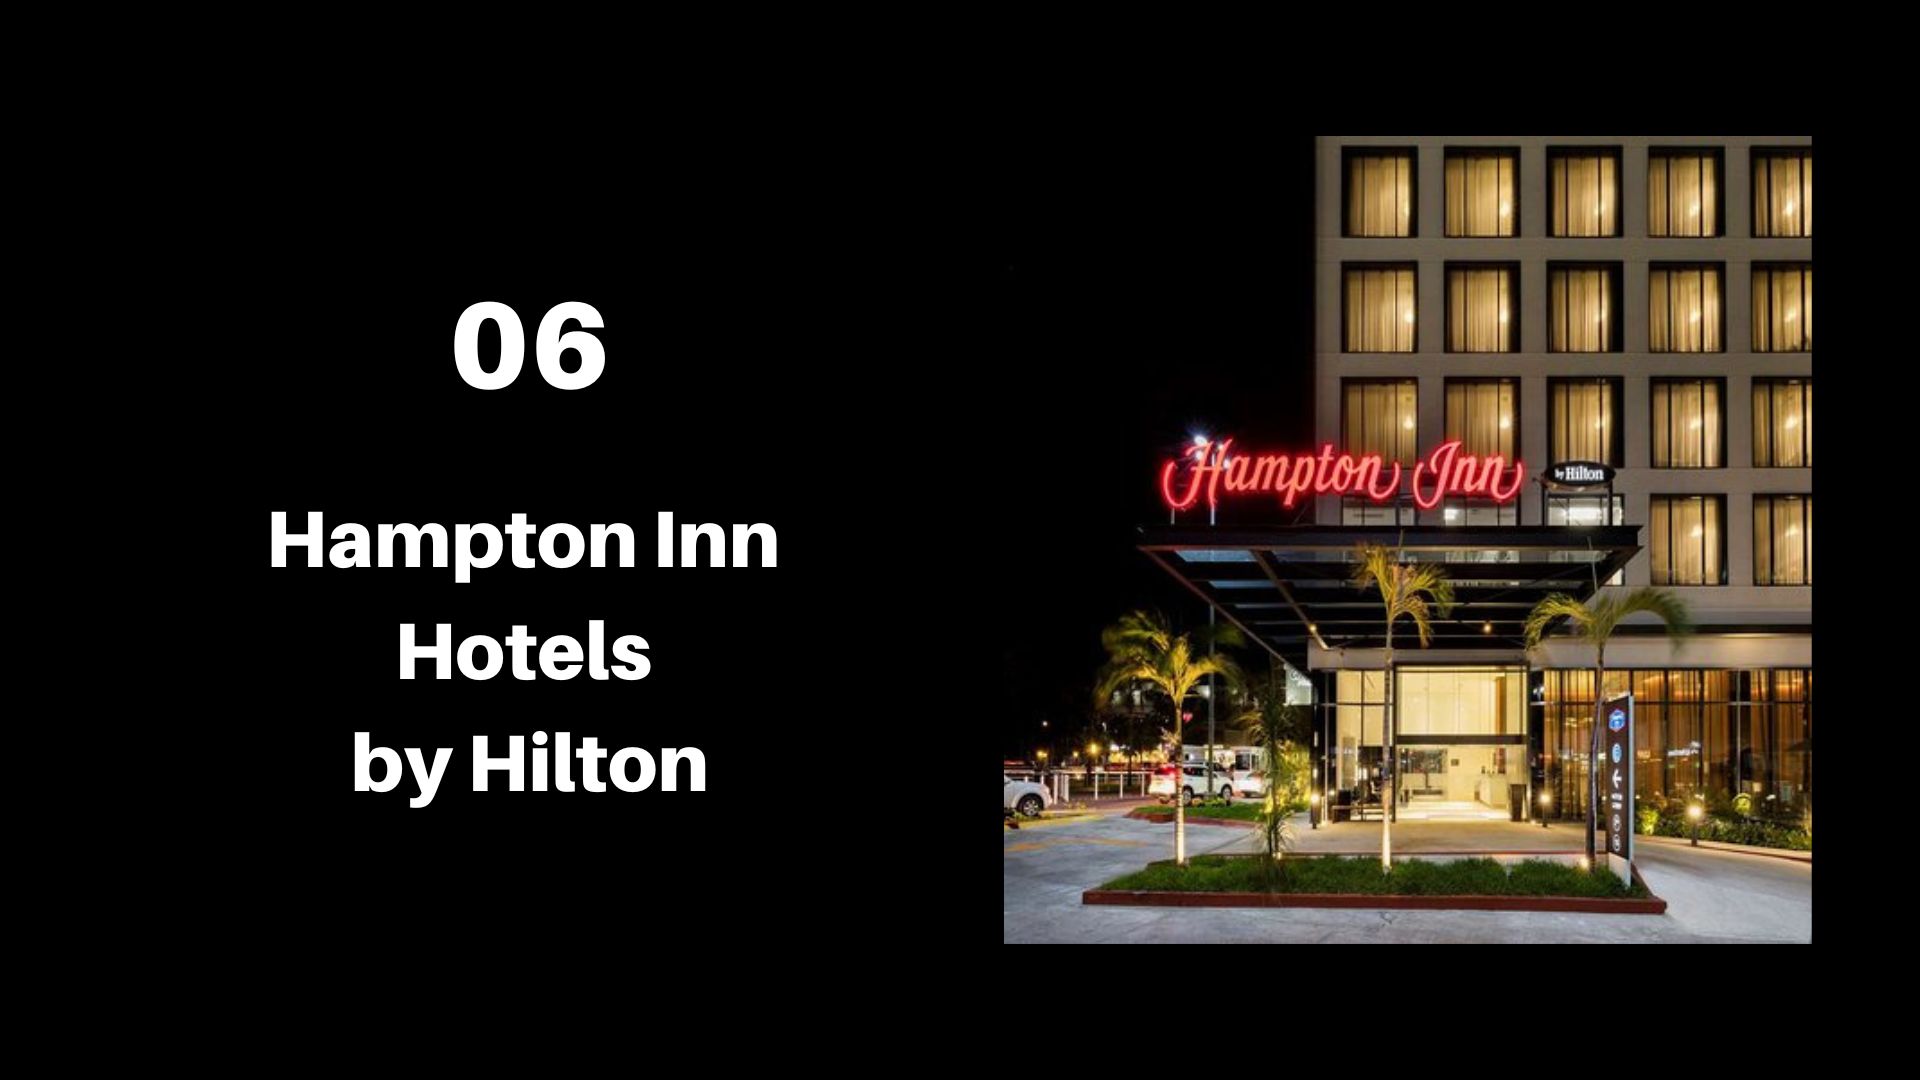 Hampton Inn Hotels by Hilton